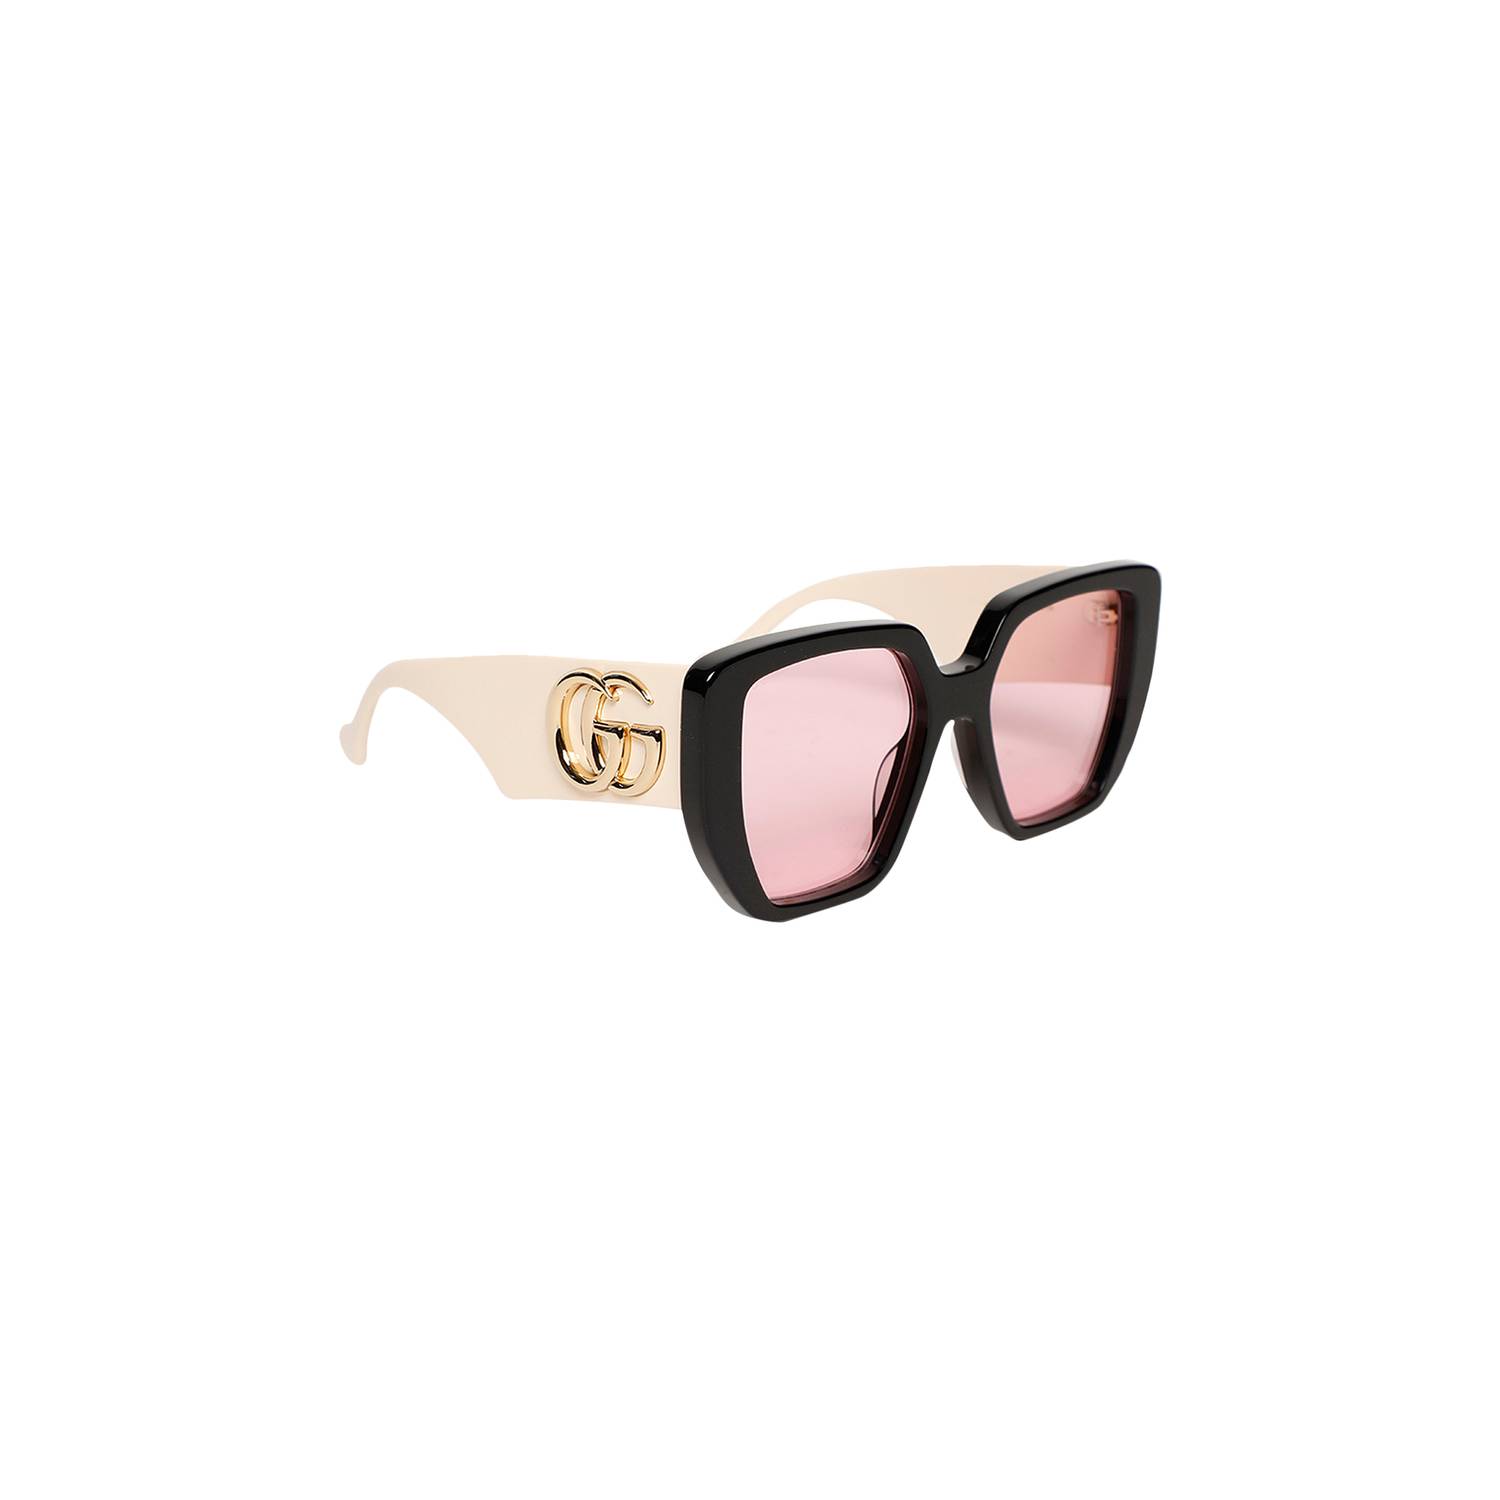 Gucci Sunglasses 'Black/Pink' - Gucci - GG0956S 002 54 | GOAT